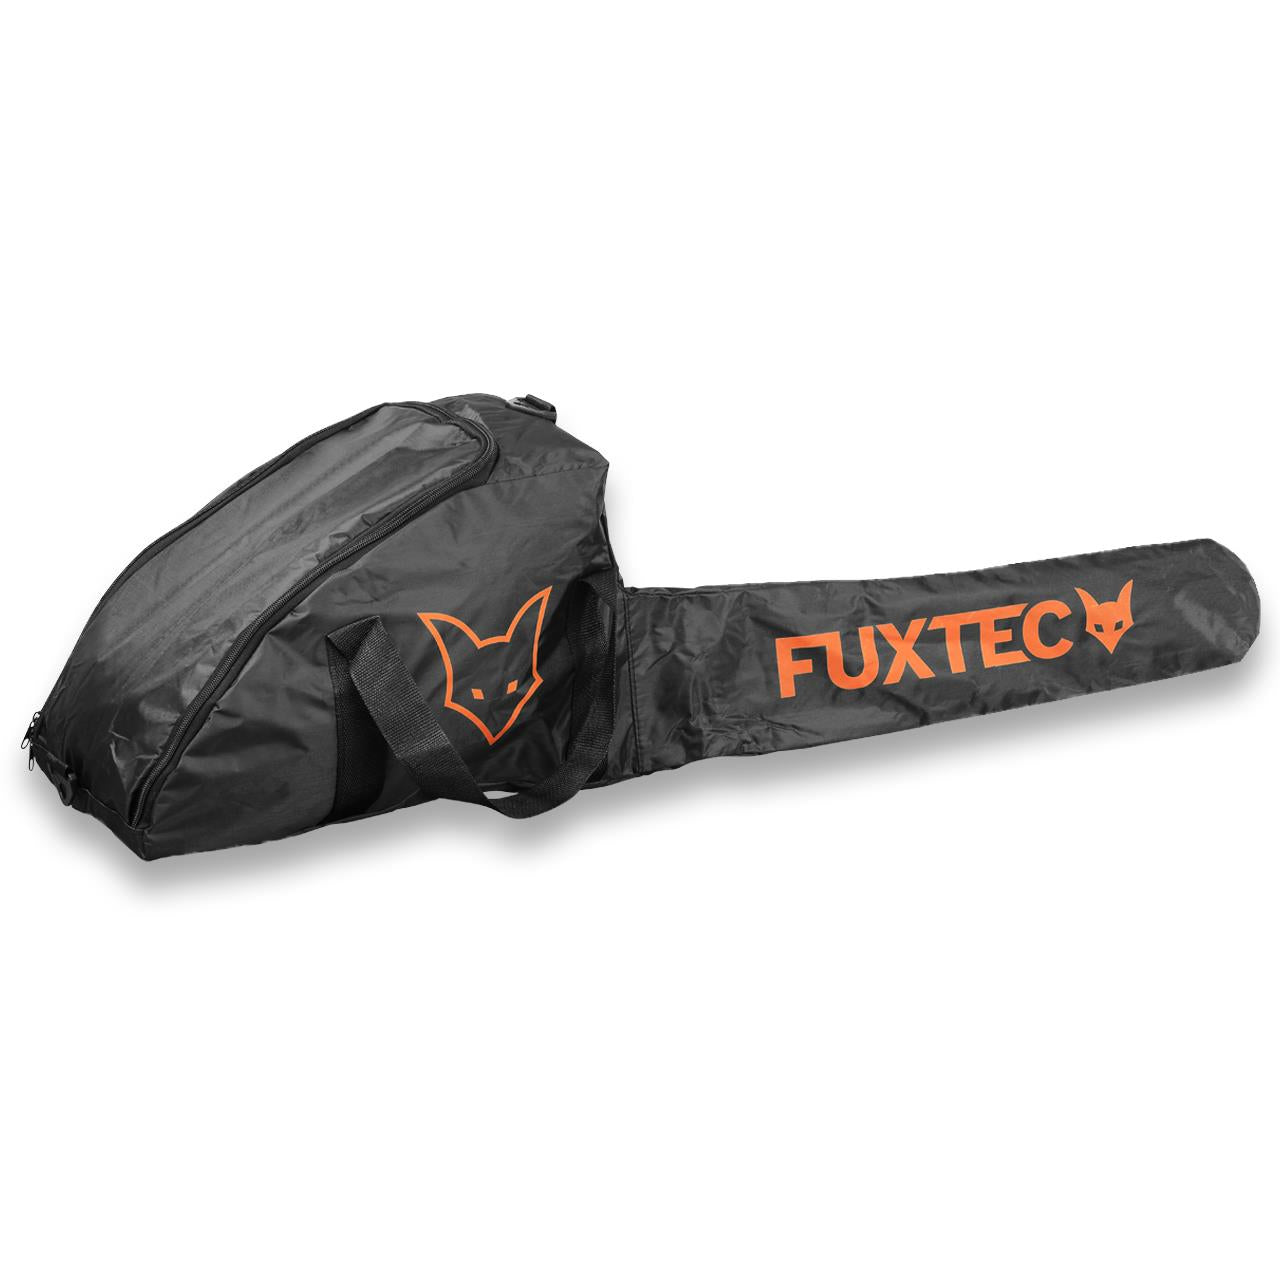 FUXTEC petrol chainsaw FX-KS262 - Black Edition